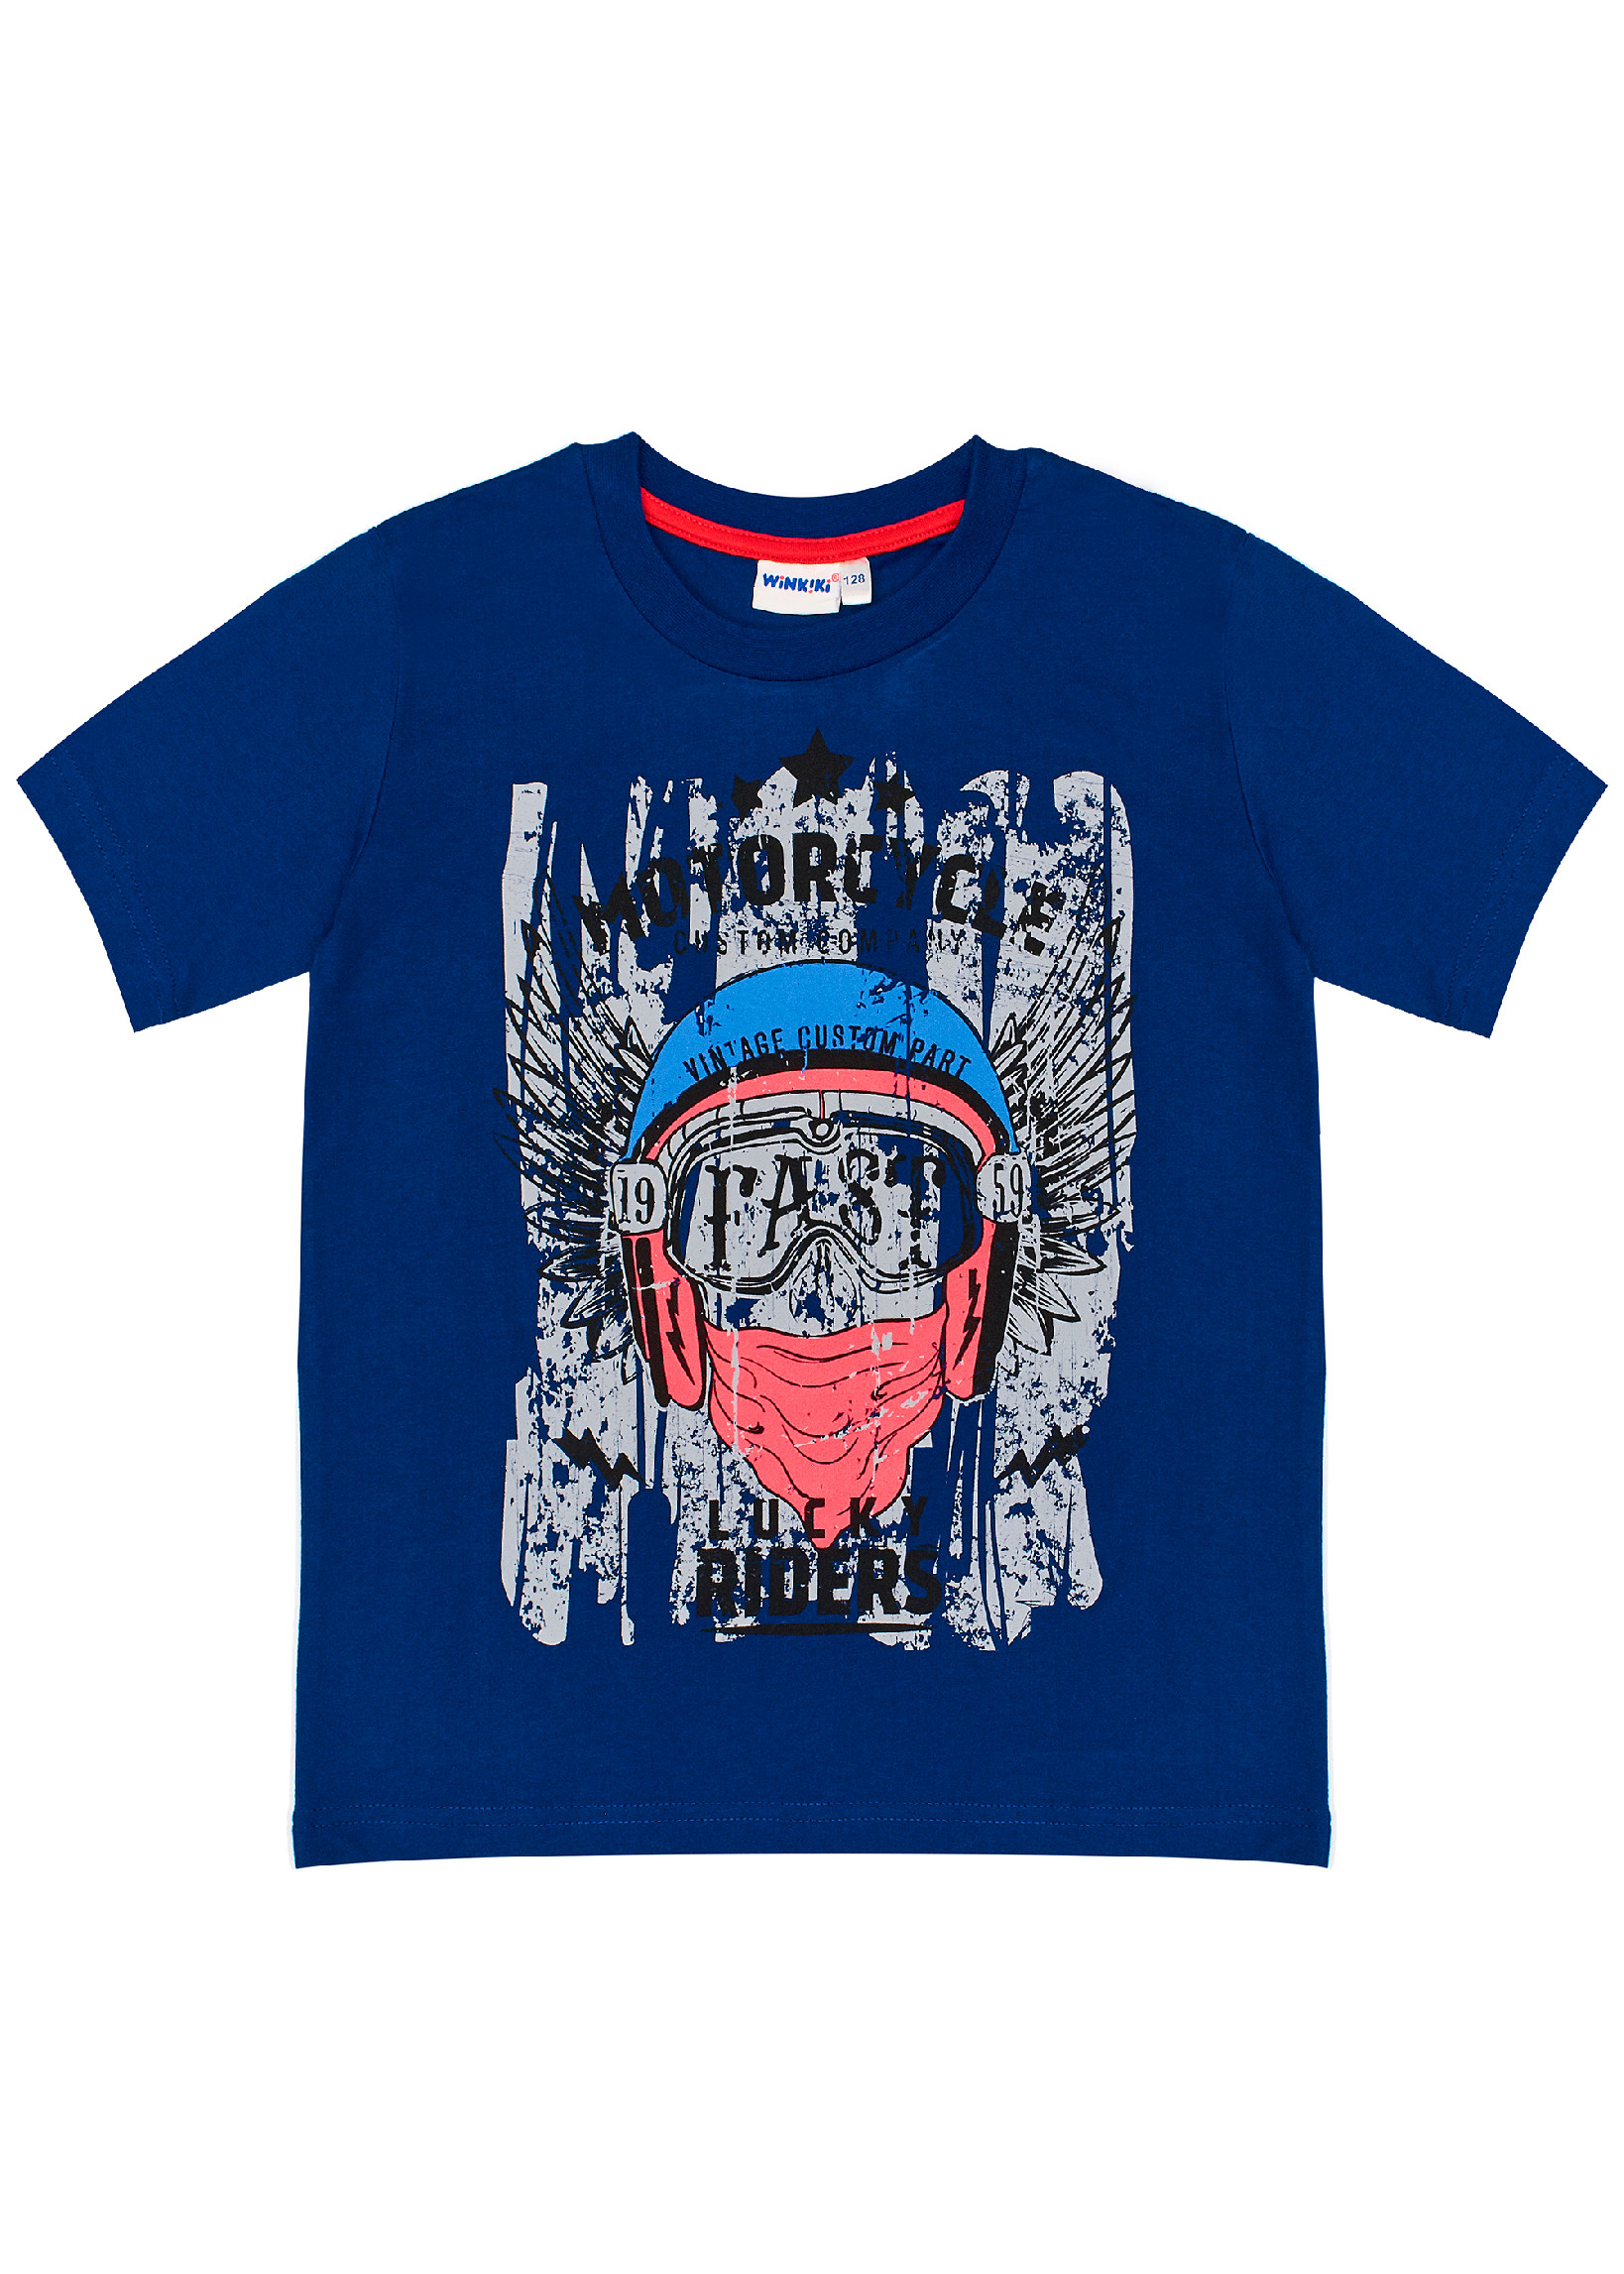 Chlapecké triko - Winkiki WJB 91380, tmavě modrá Barva: Modrá, Velikost: 134